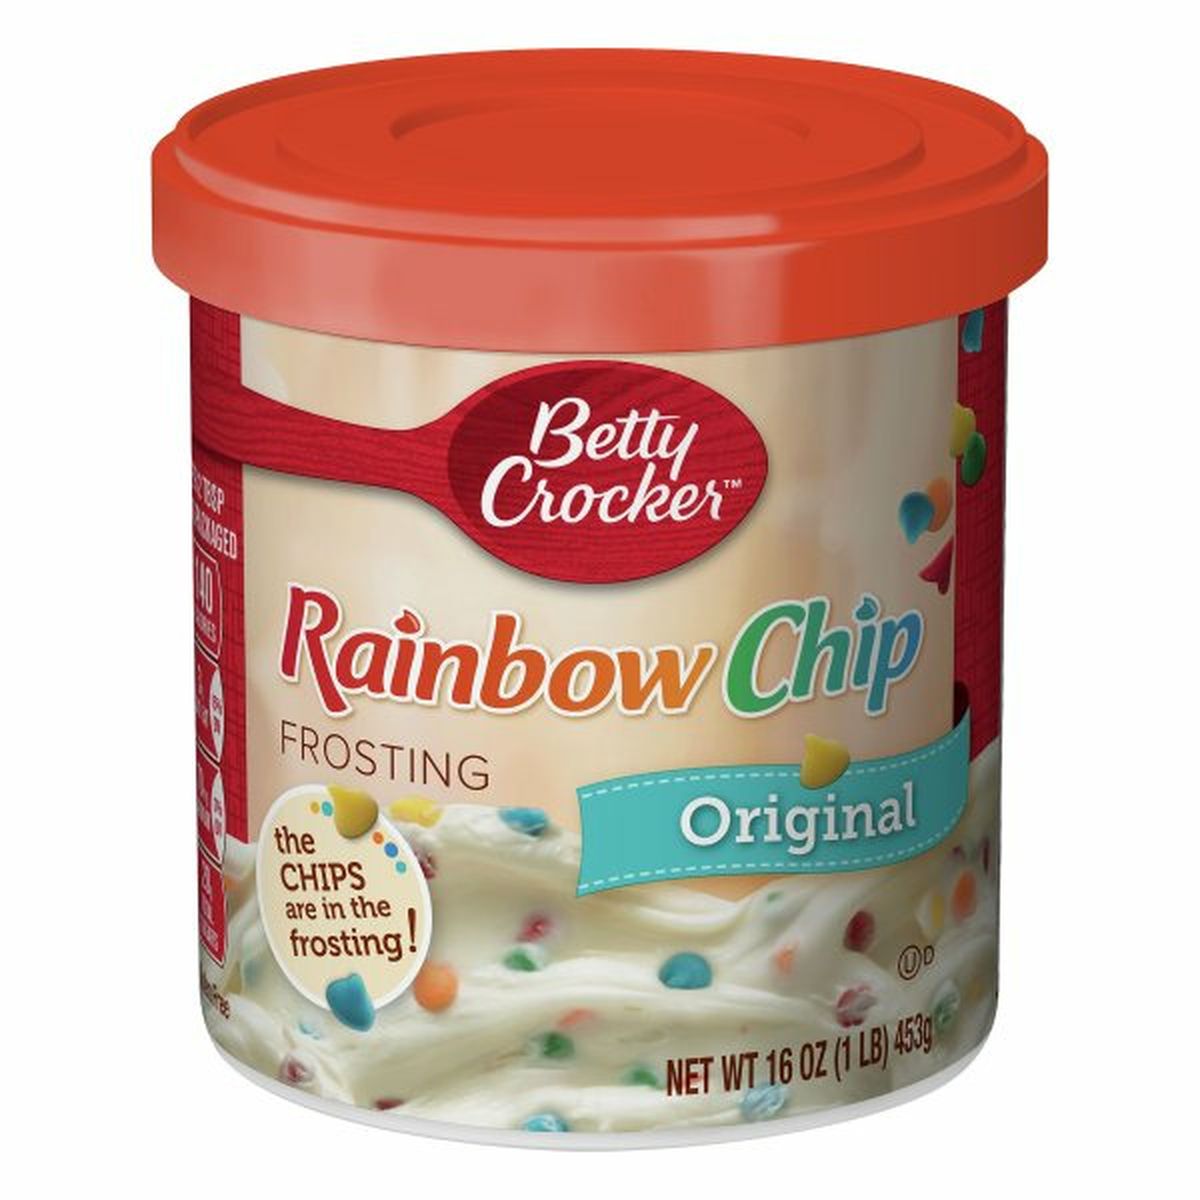 Calories in Betty Crocker Frosting, Rainbow Chip, Original